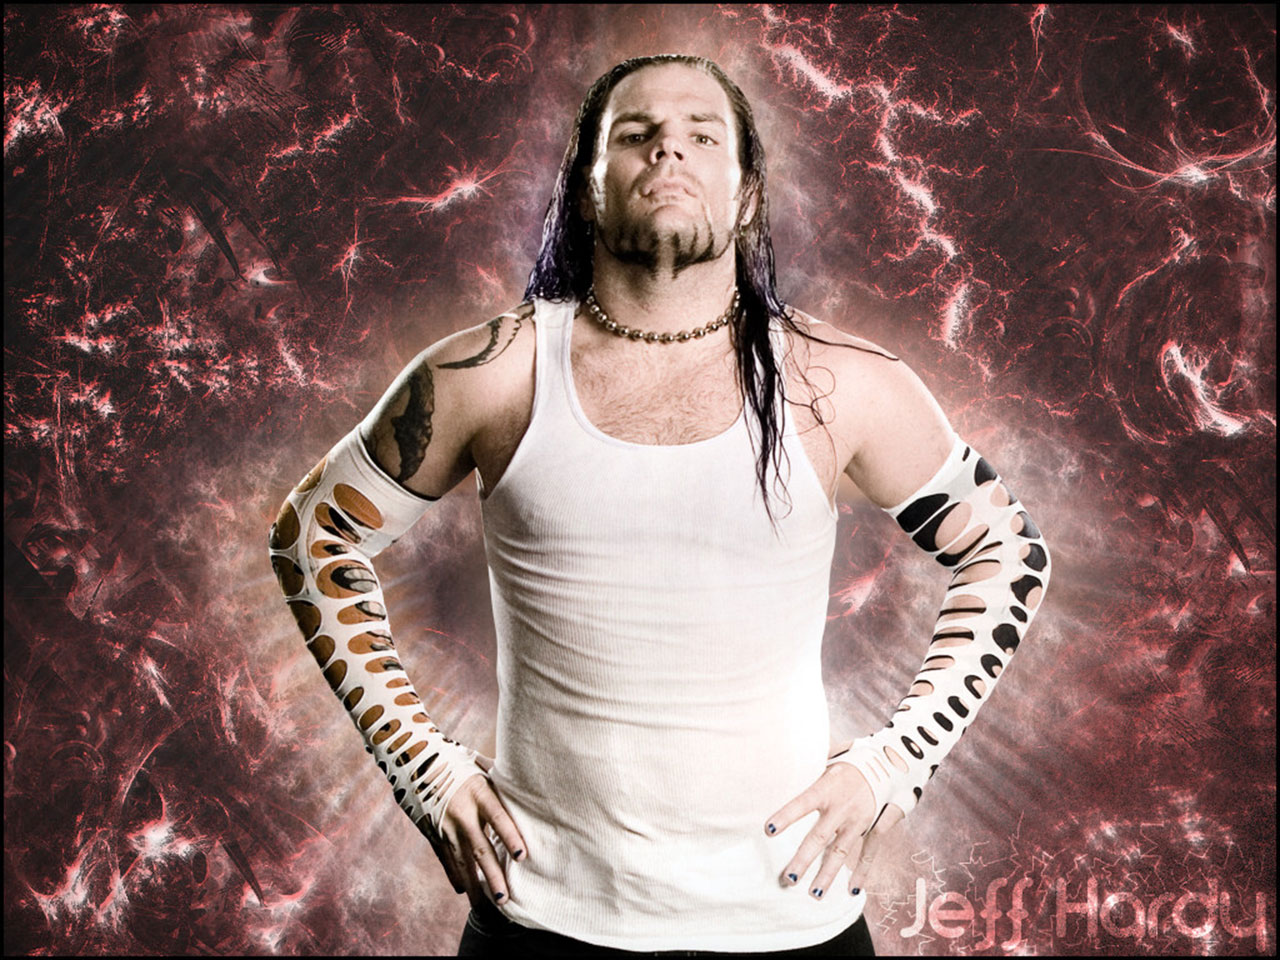 jeff hardy wallpaper,human,arm,photography,muscle,wrestler